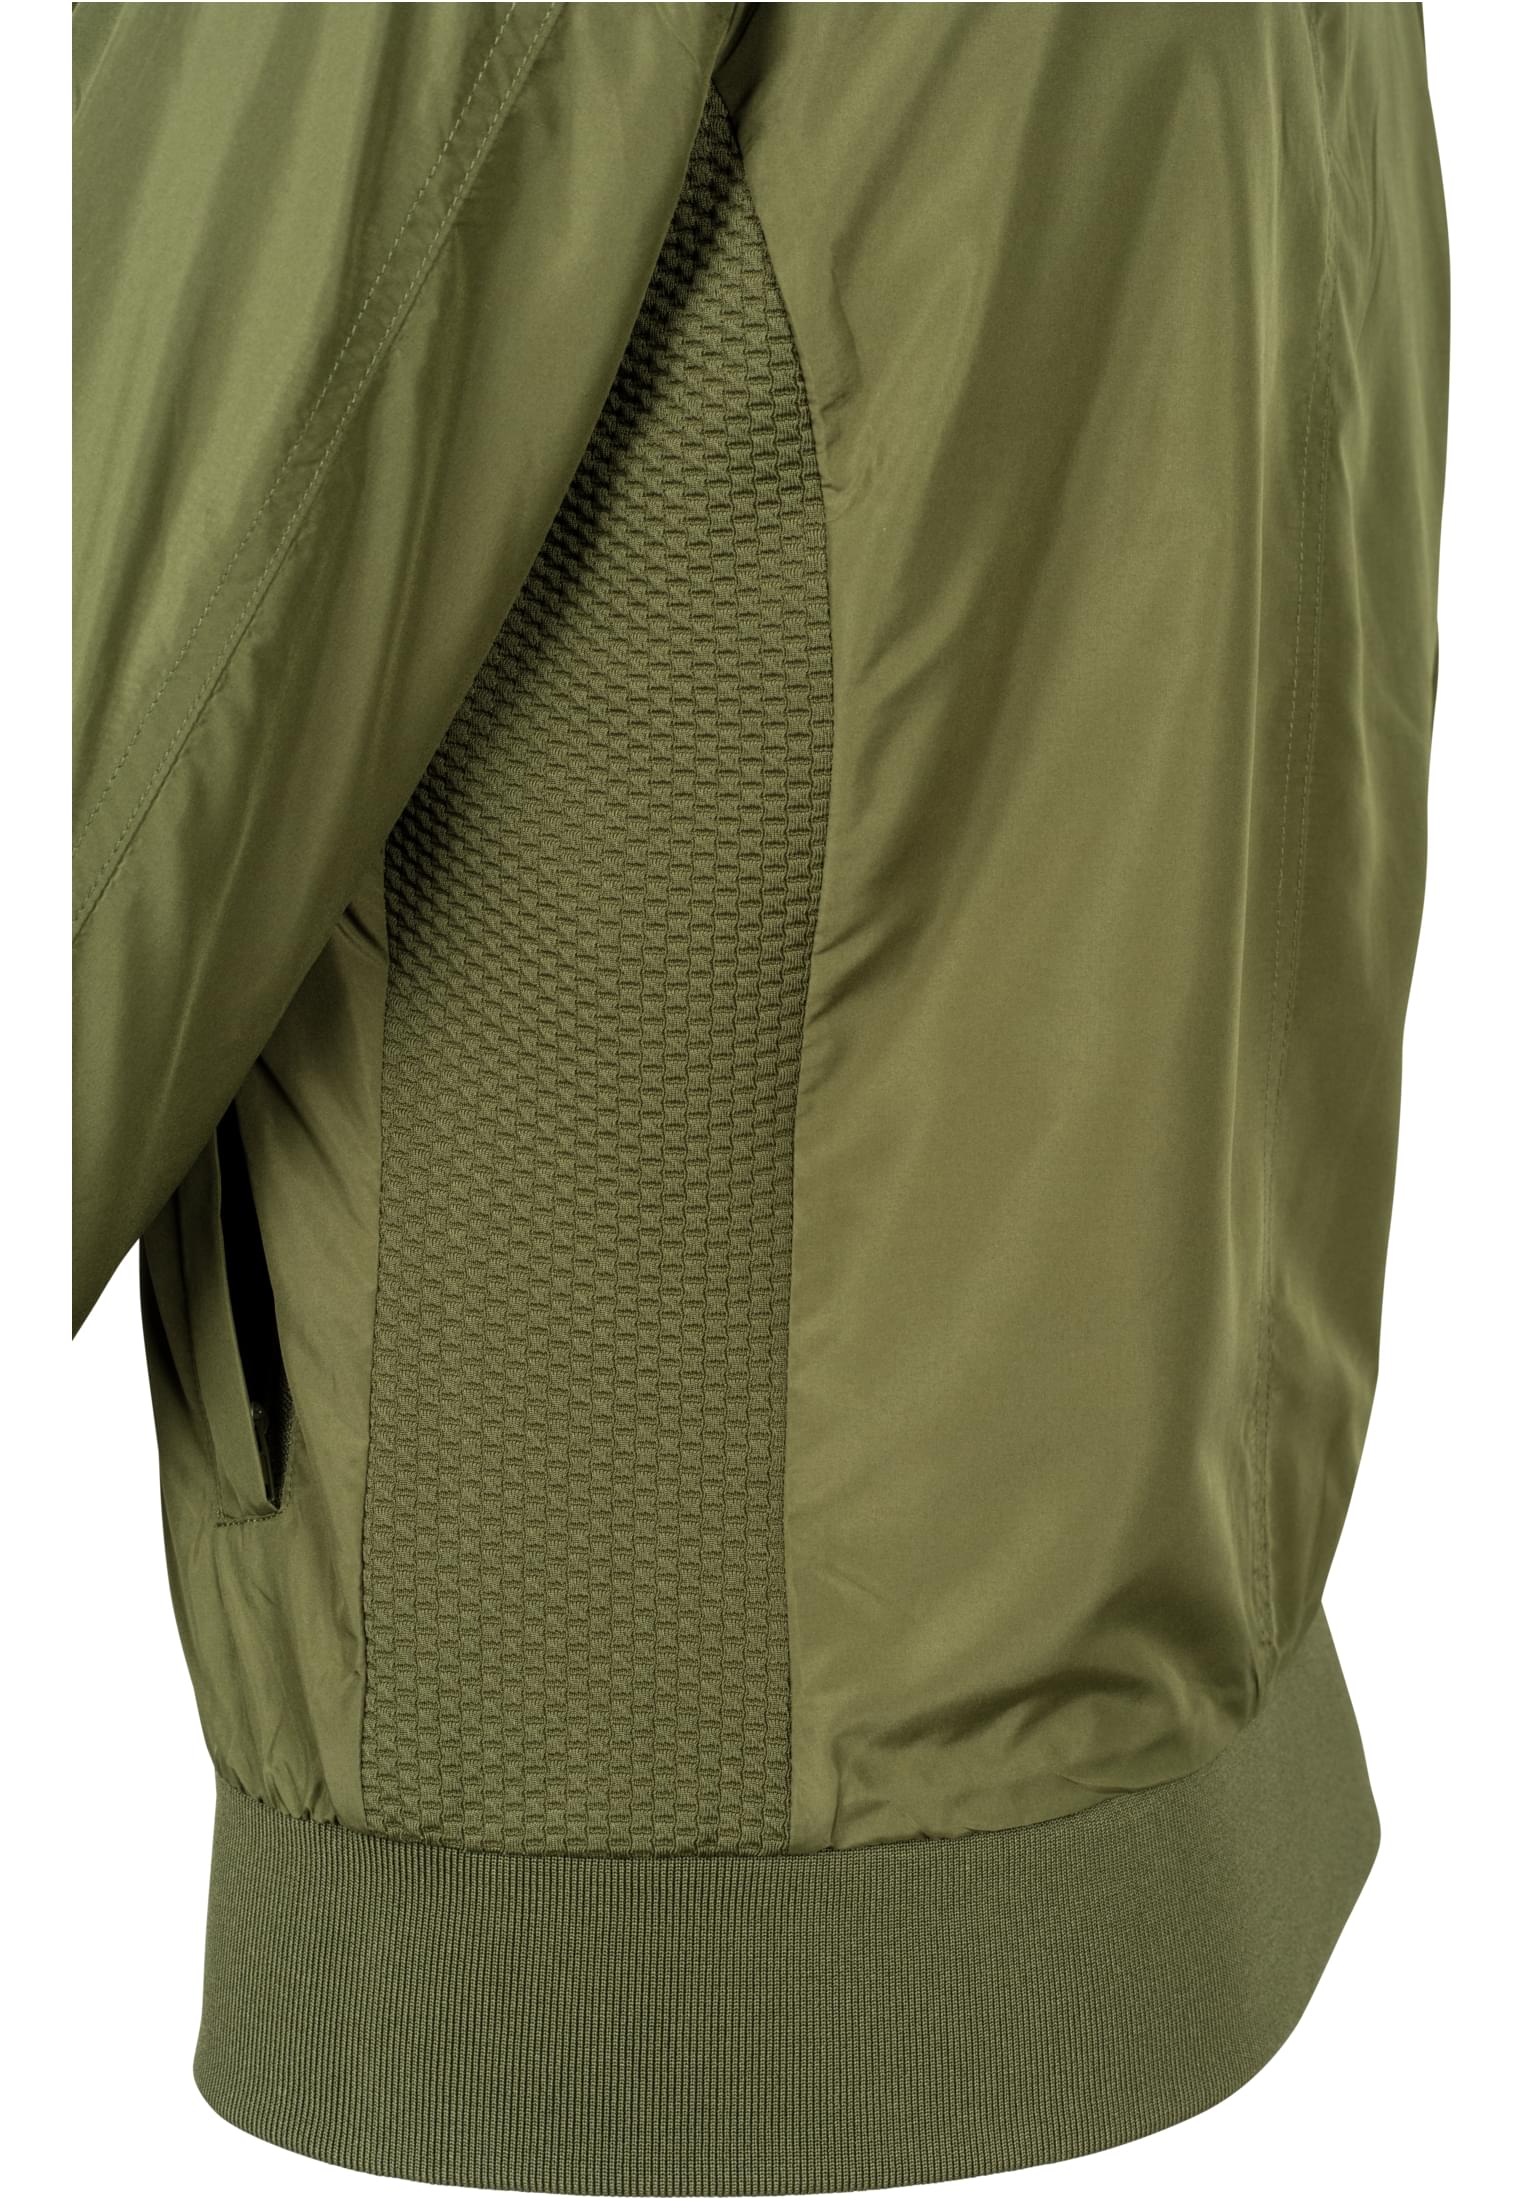 Frauen Ladies Light Bomber Jacket in Farbe olive